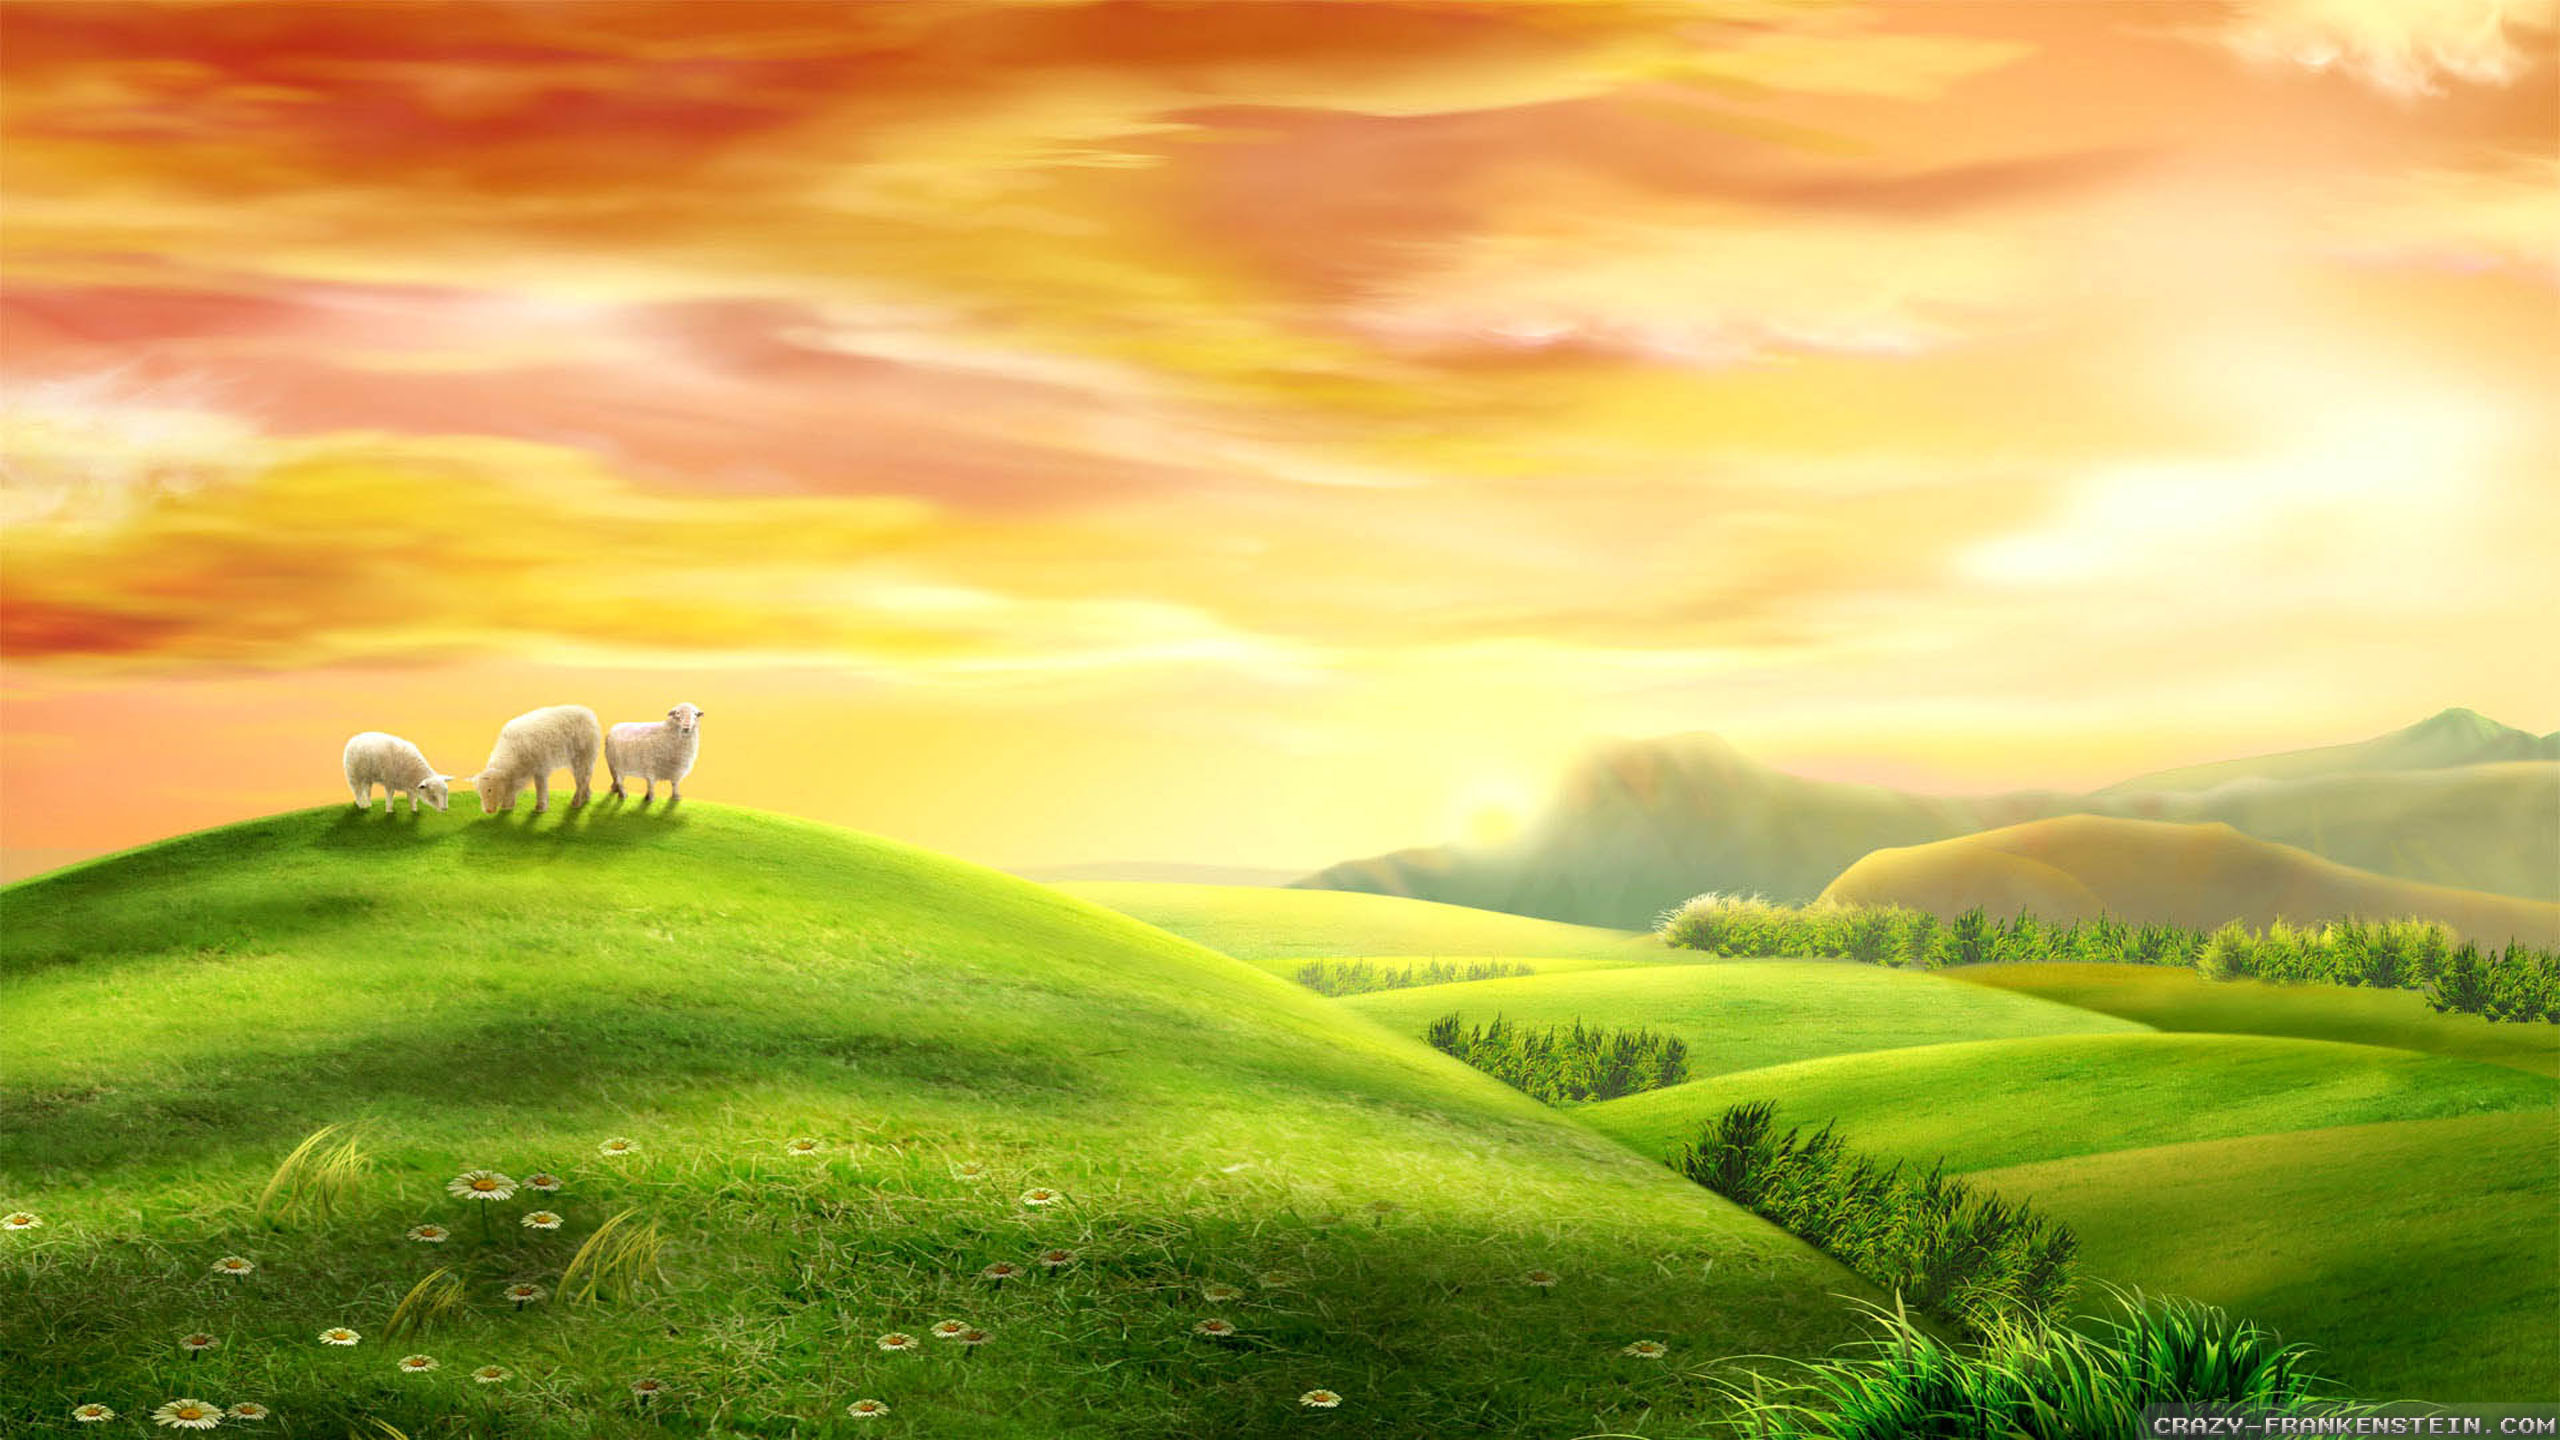 2560x1440, Wallpaper - Sheep On Green Pasture - HD Wallpaper 